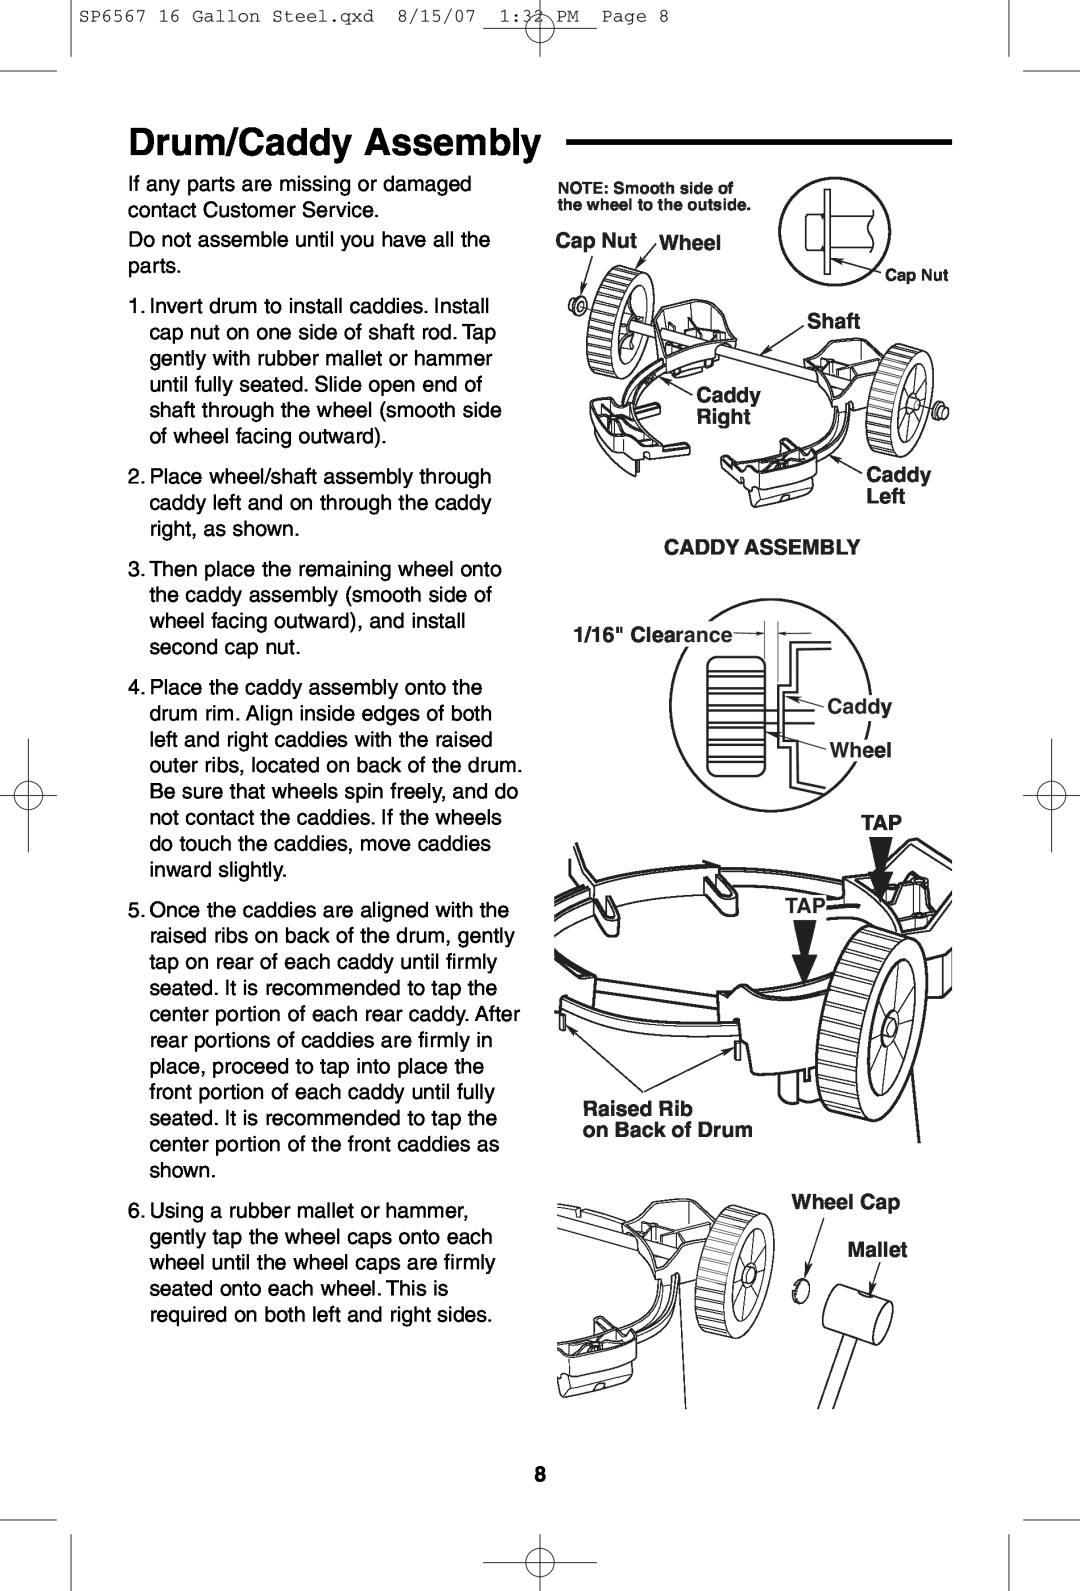 RIDGID WD1950 manual Drum/Caddy Assembly, Cap Nut Wheel, Shaft, Caddy Right Caddy Left CADDY ASSEMBLY 